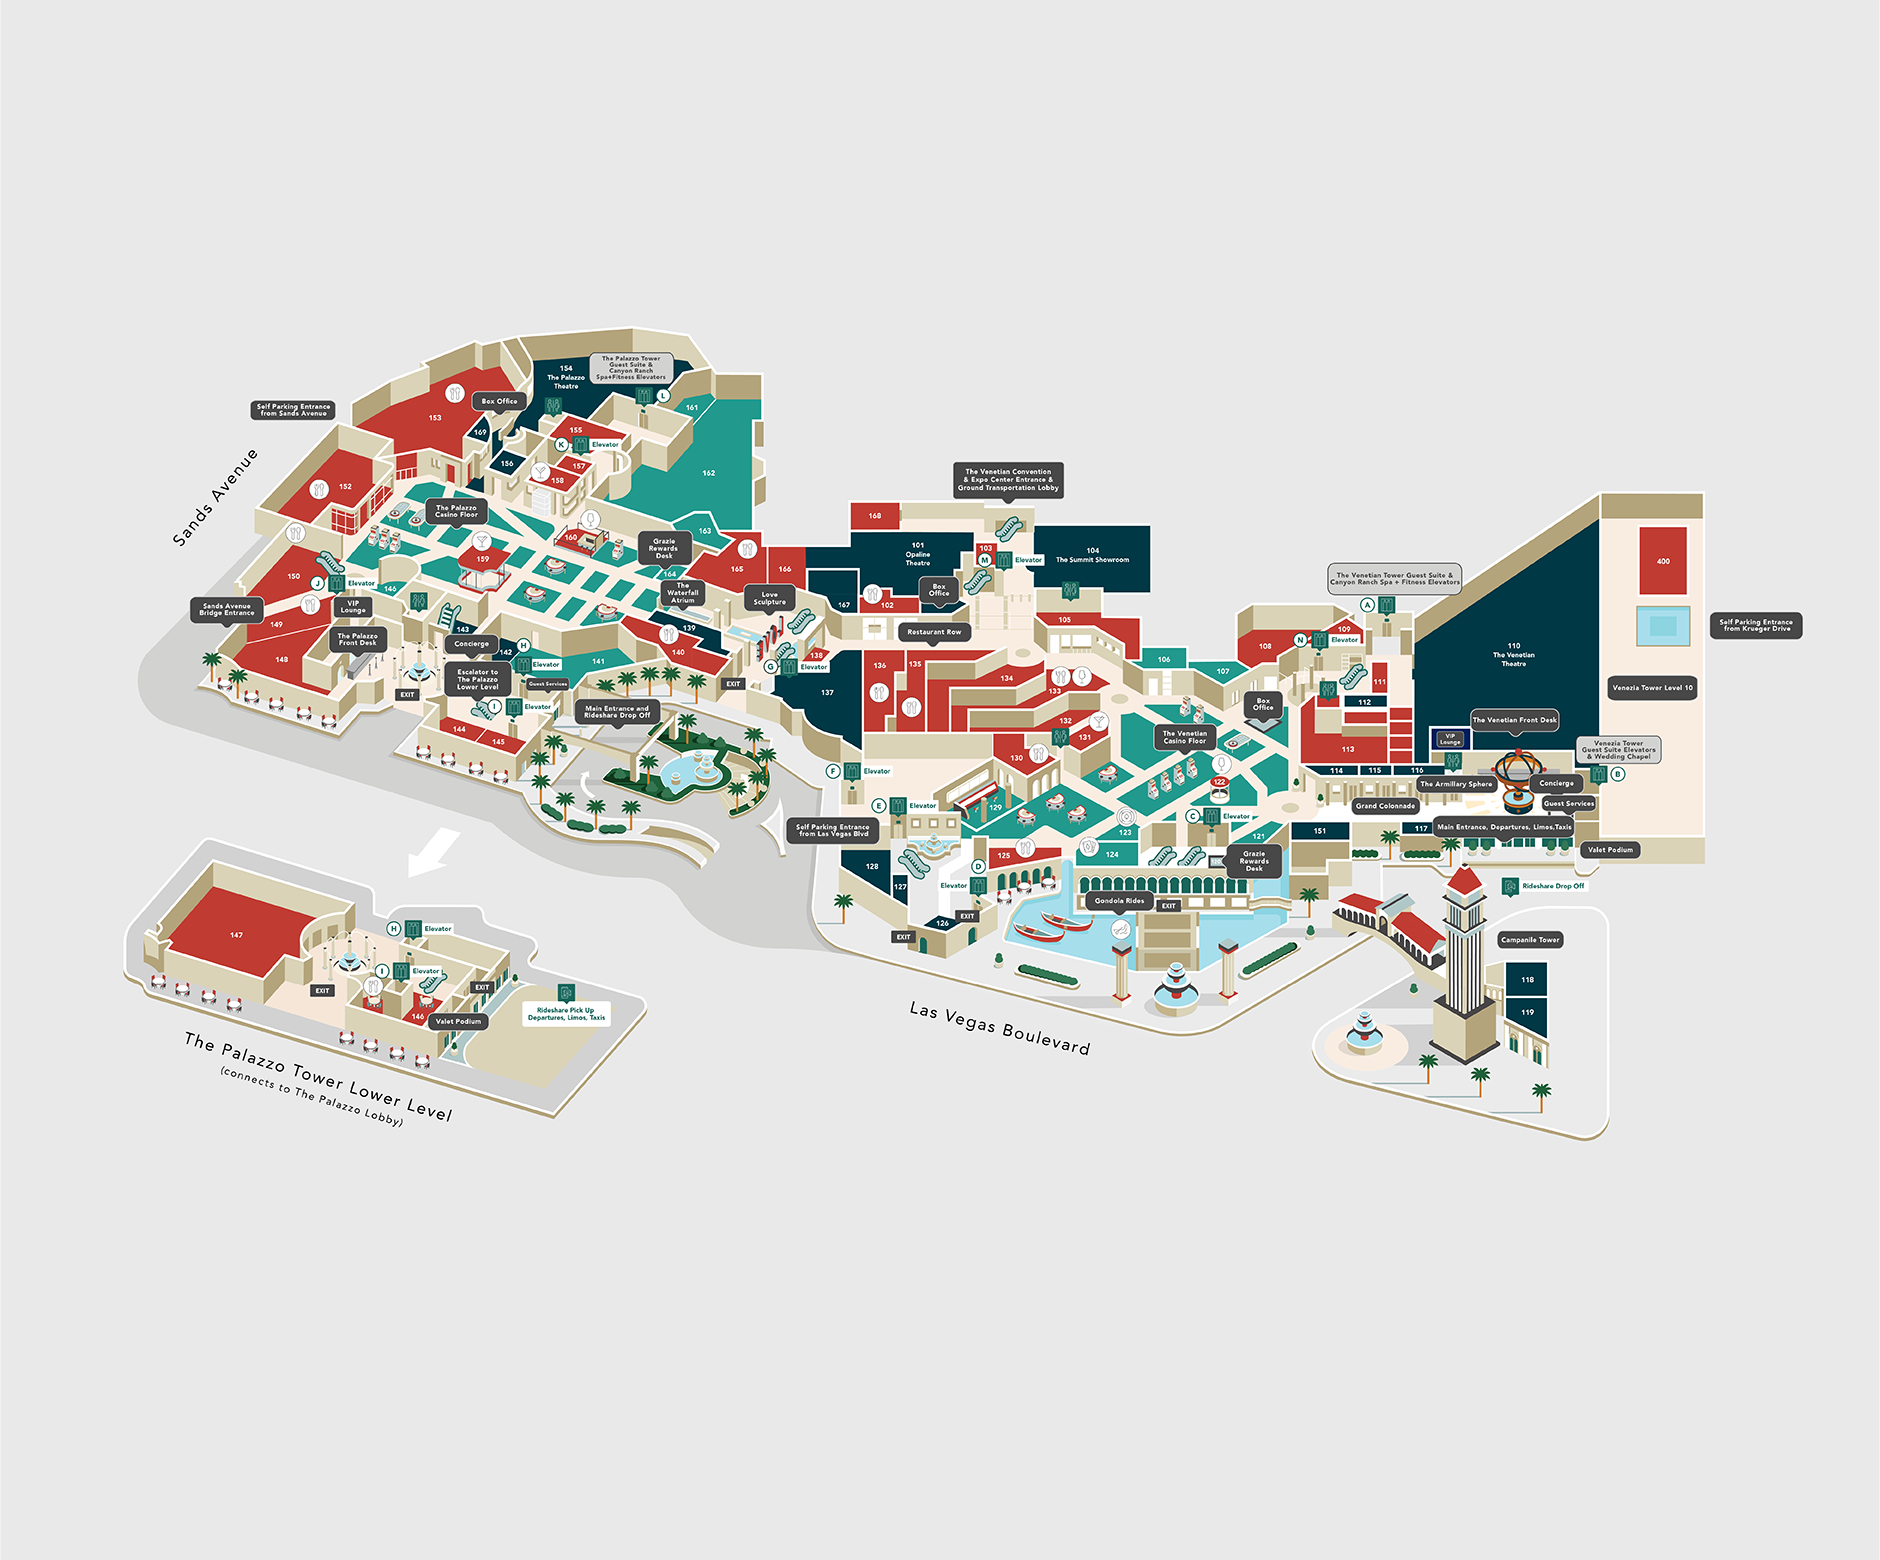 vegas hotels map 2022